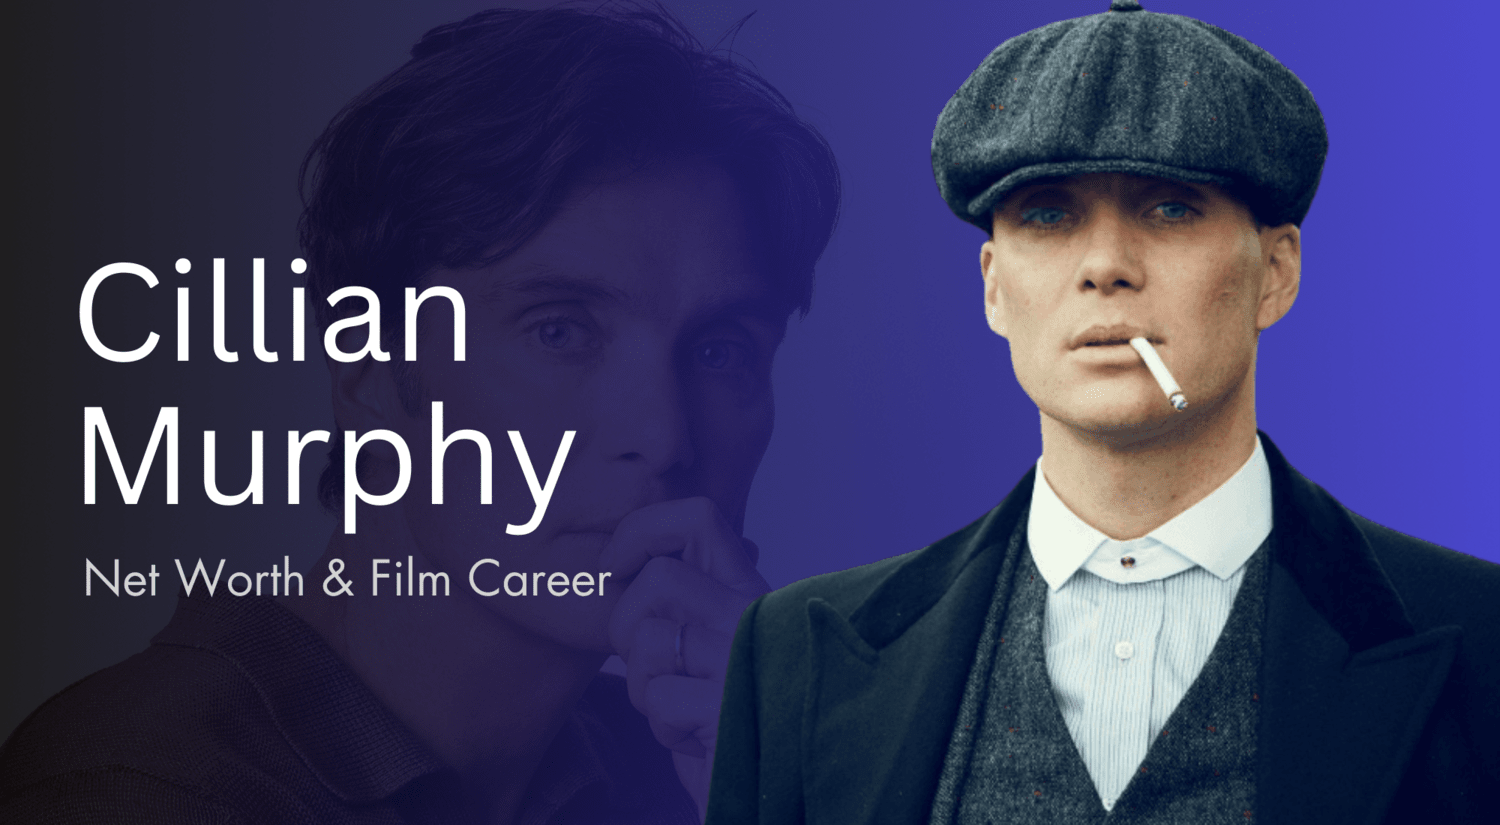 cillian murphy next film career and net worth